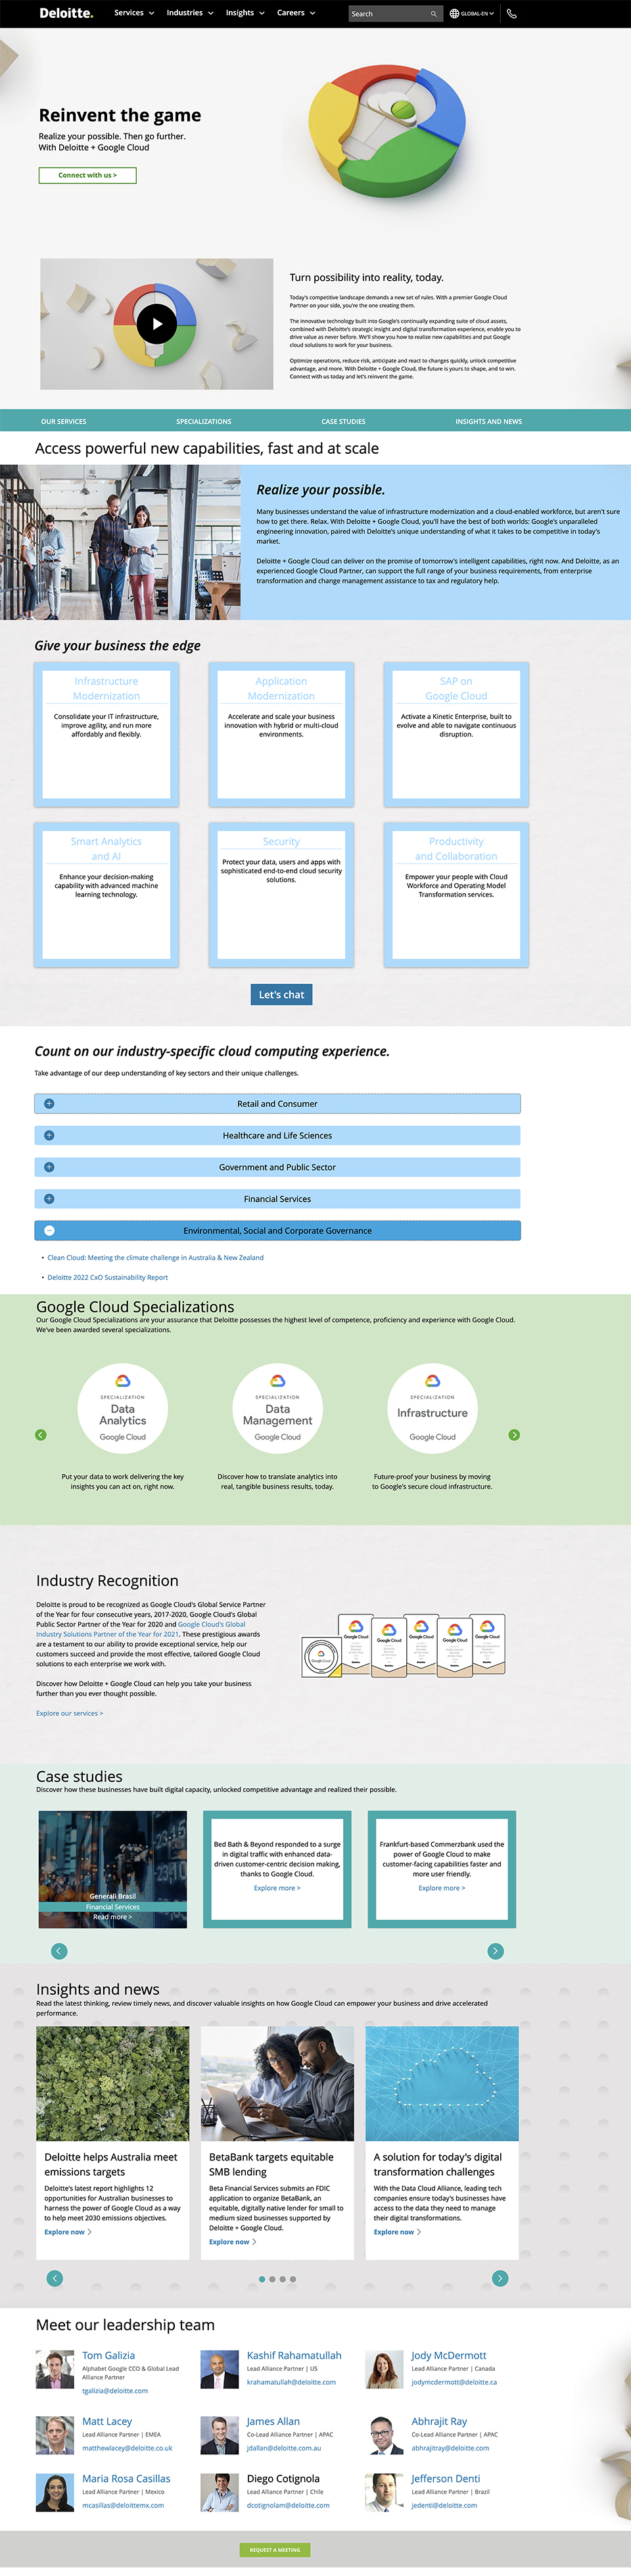 Deloitte + Google Cloud Alliance web site